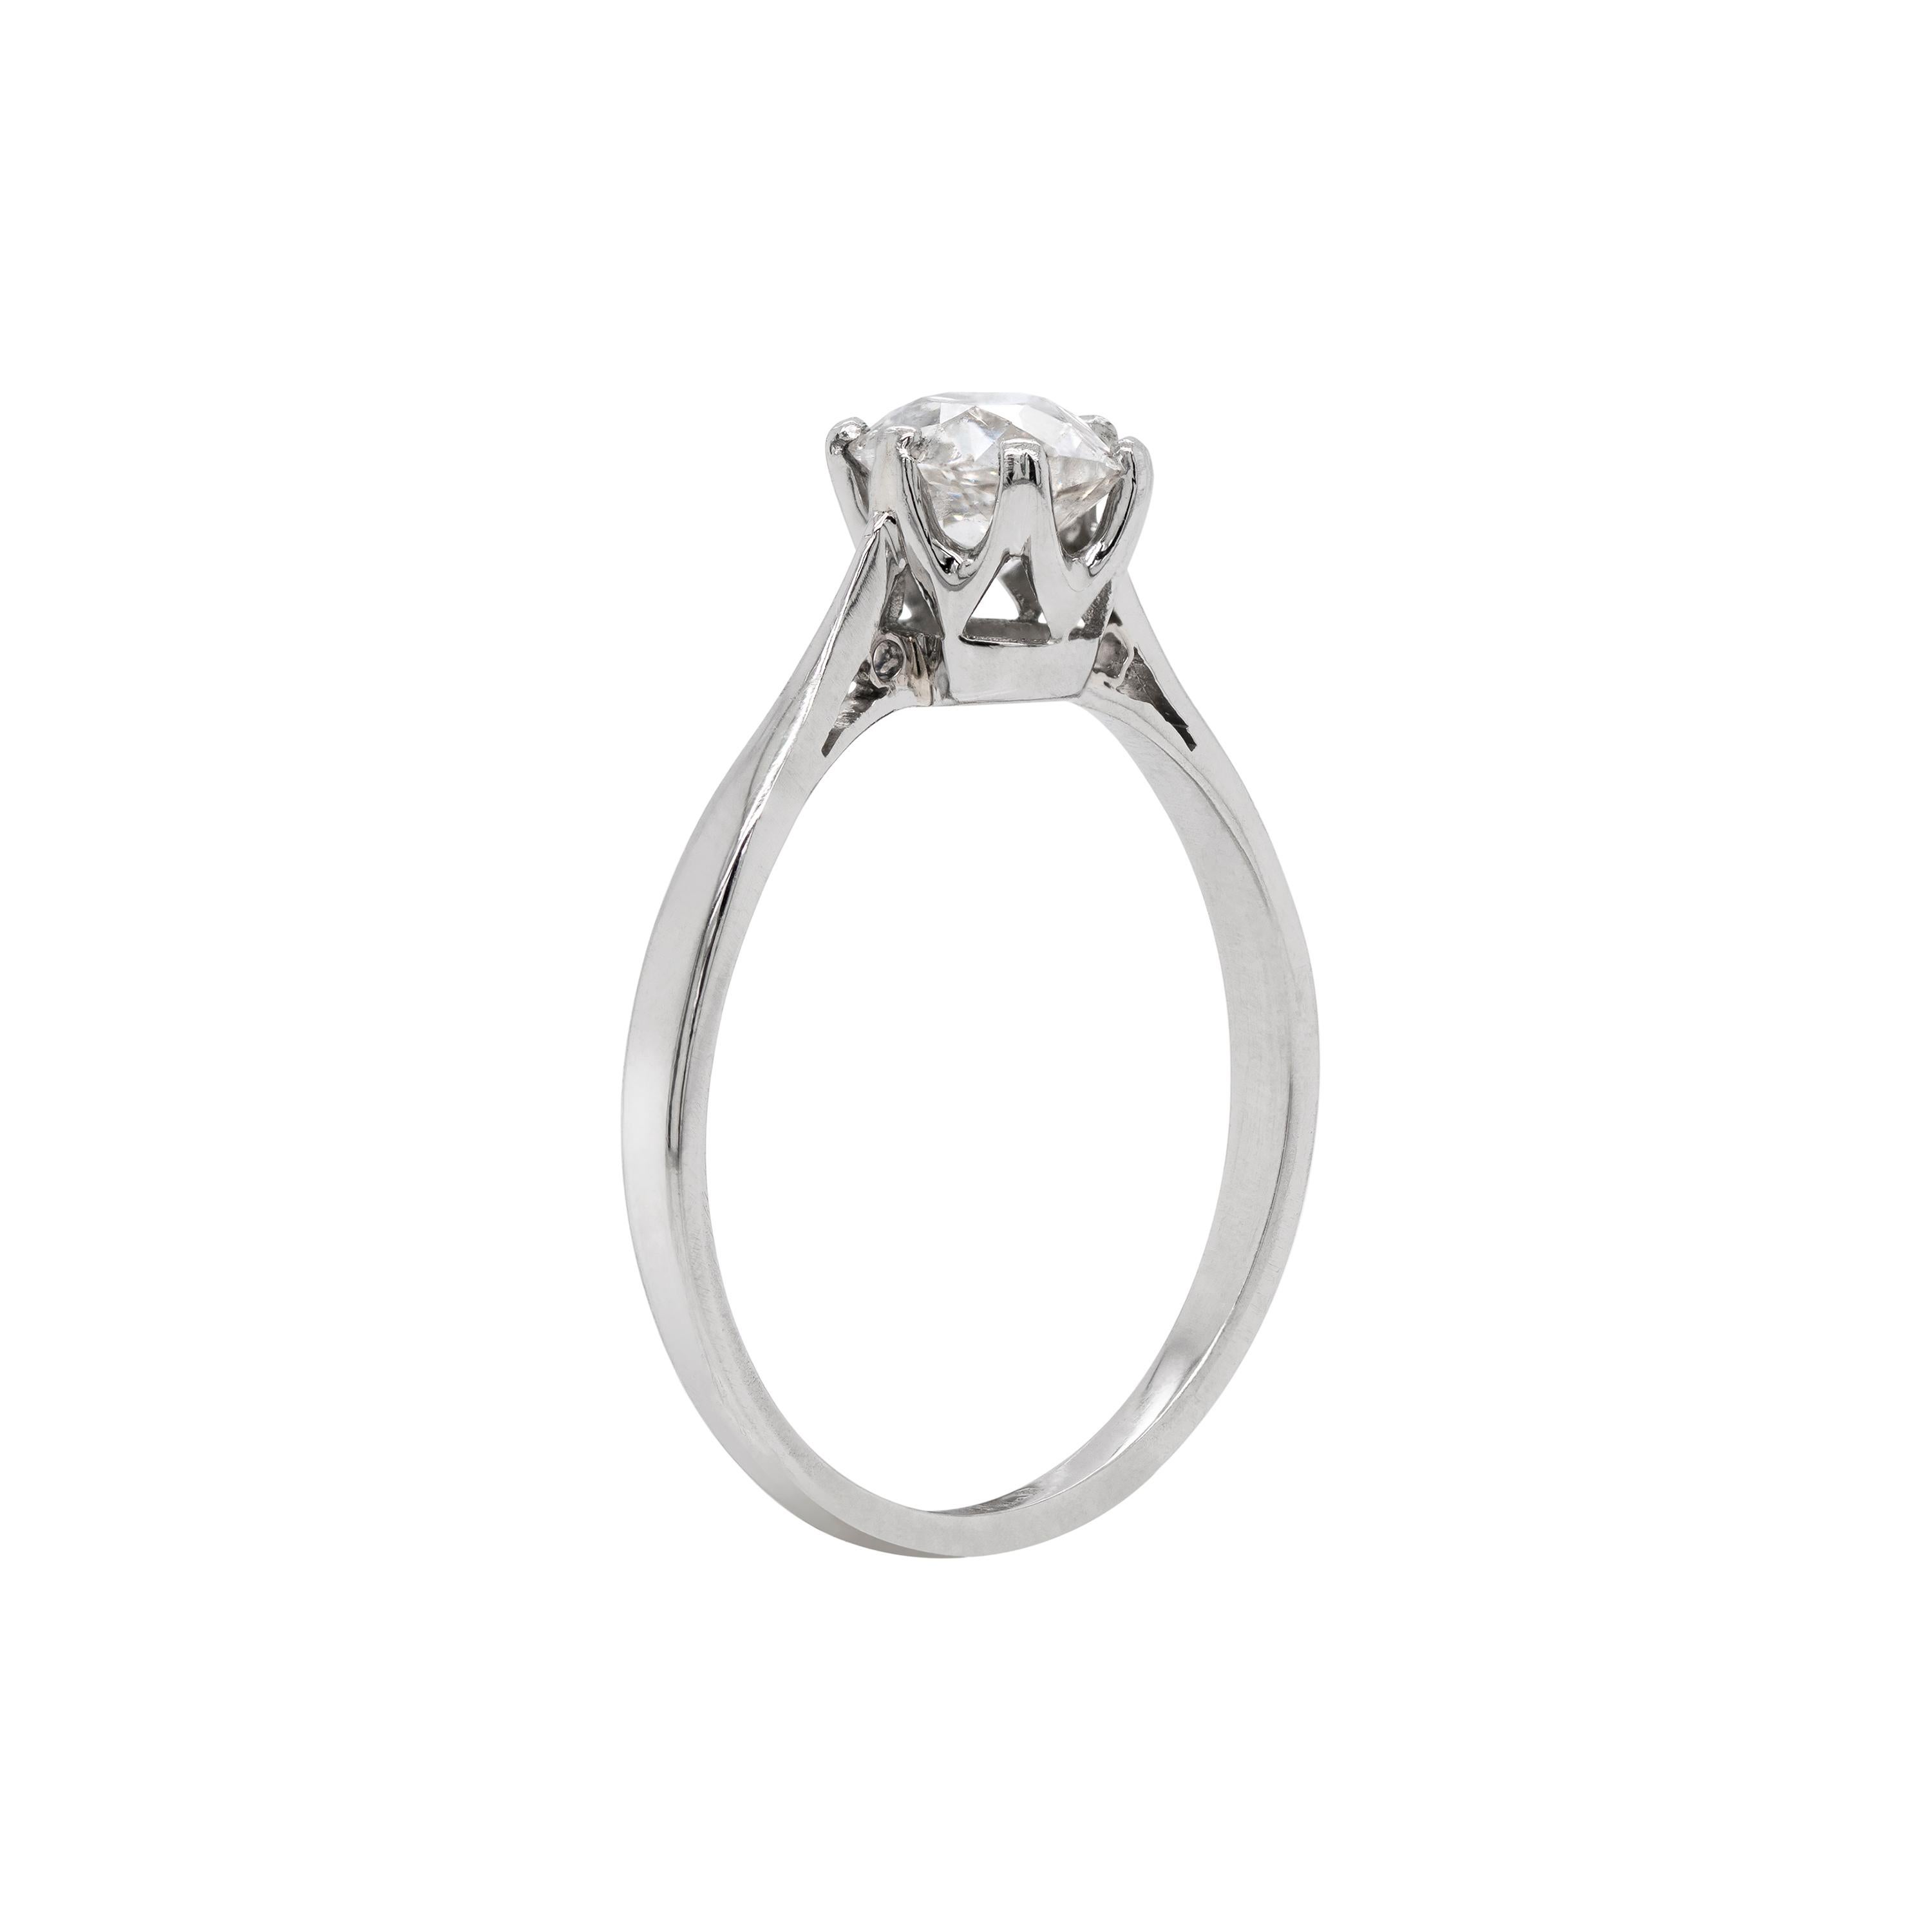 0.76 carat diamond ring